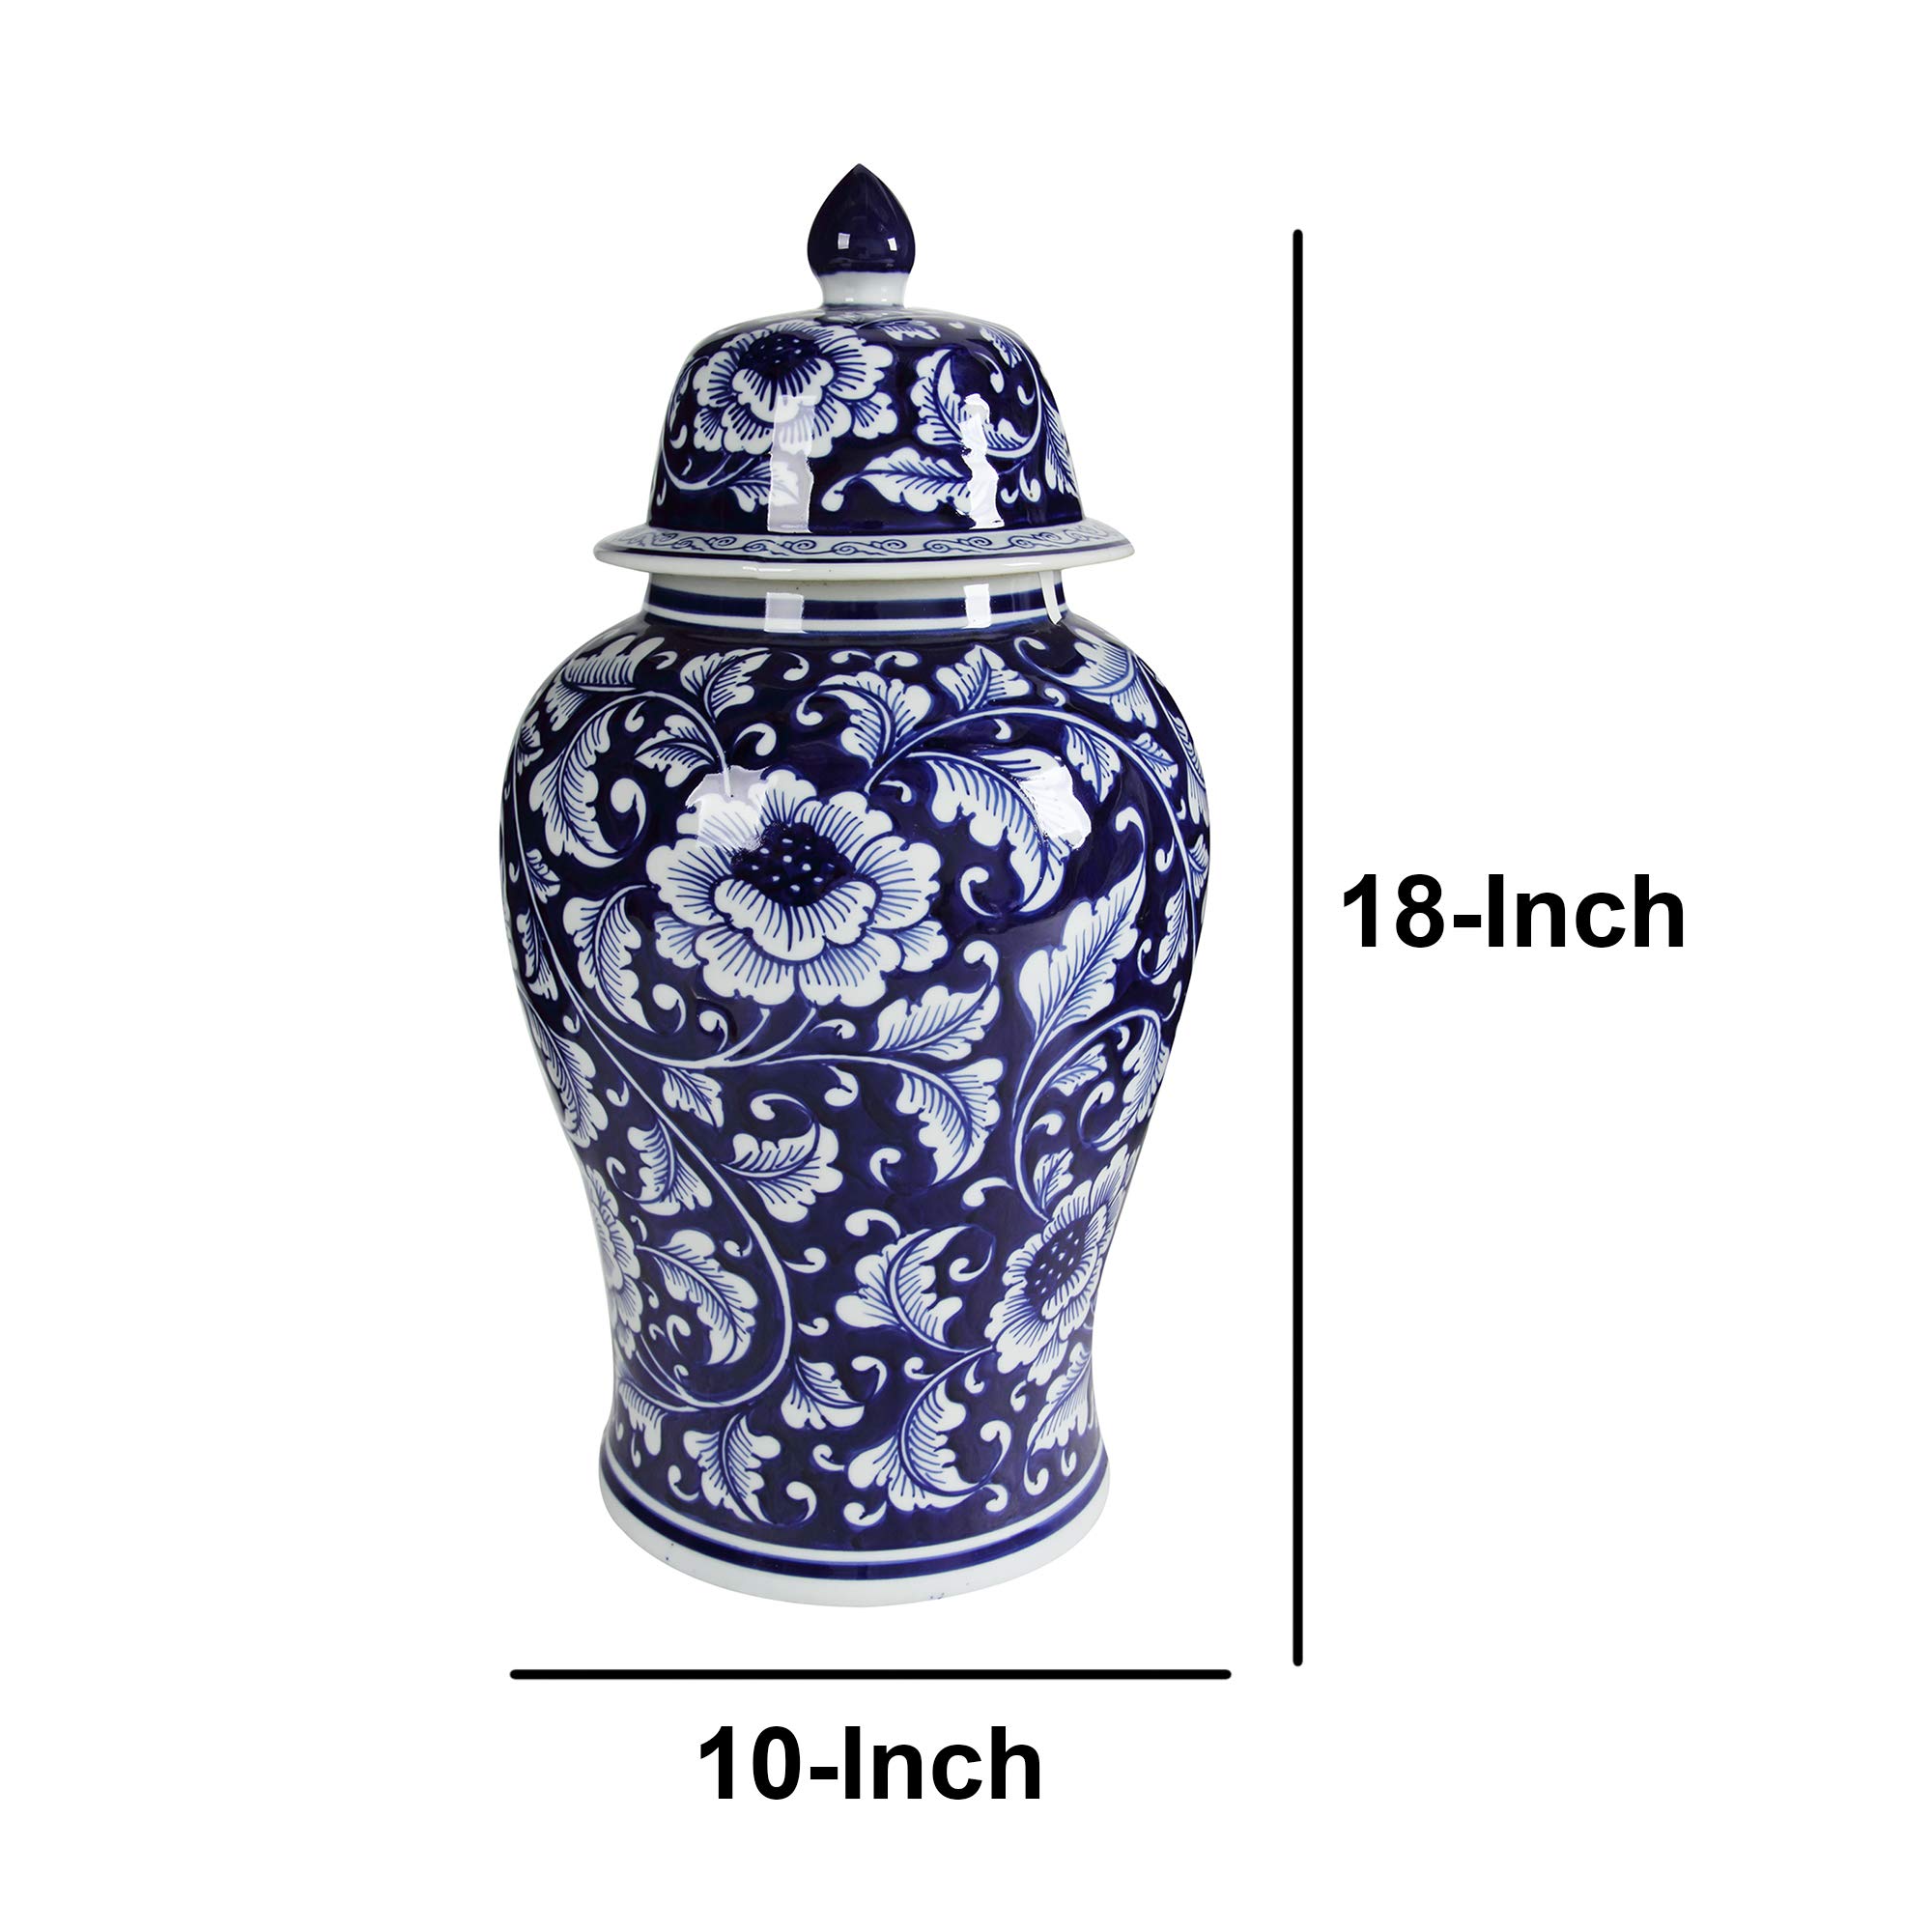 Benjara Decorative Porcelain Ginger Jar With Finial Lid, Large, White